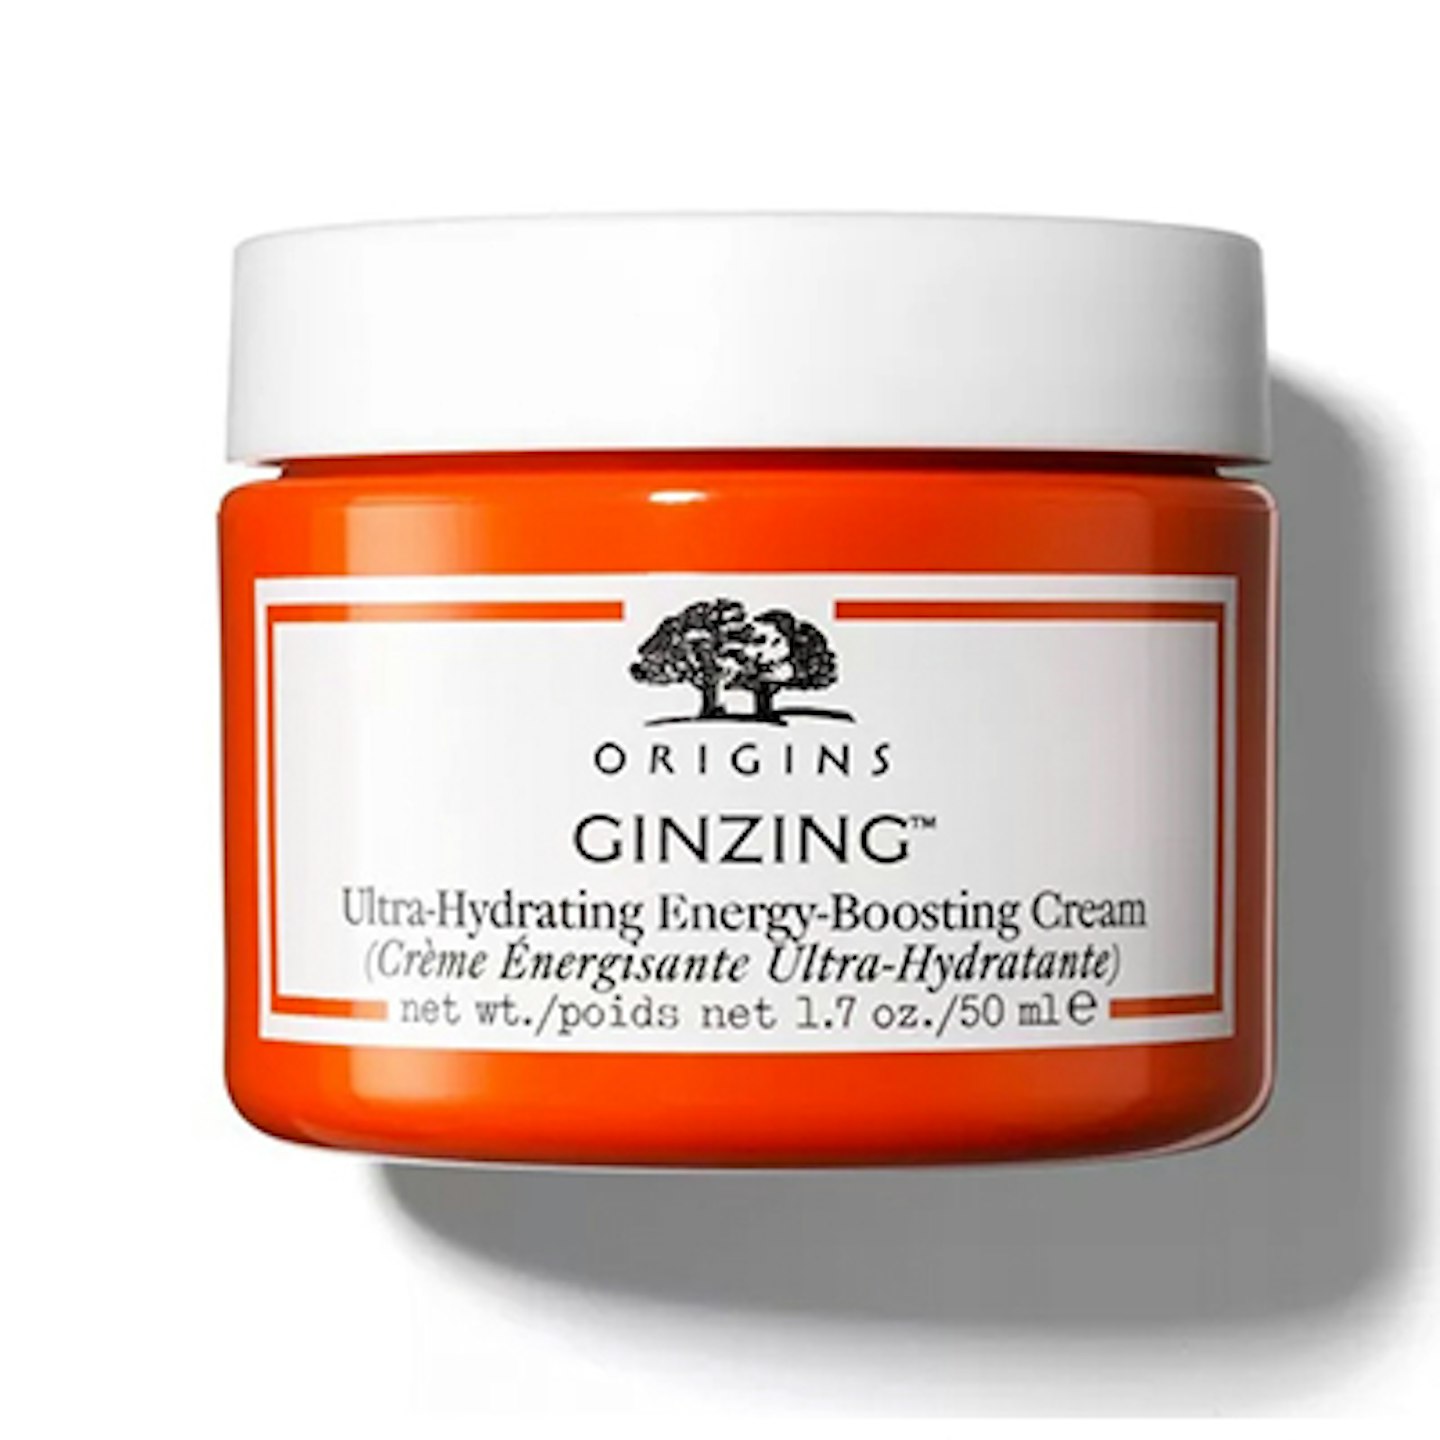 Origins GinZing Ultra-Hydrating Face Cream